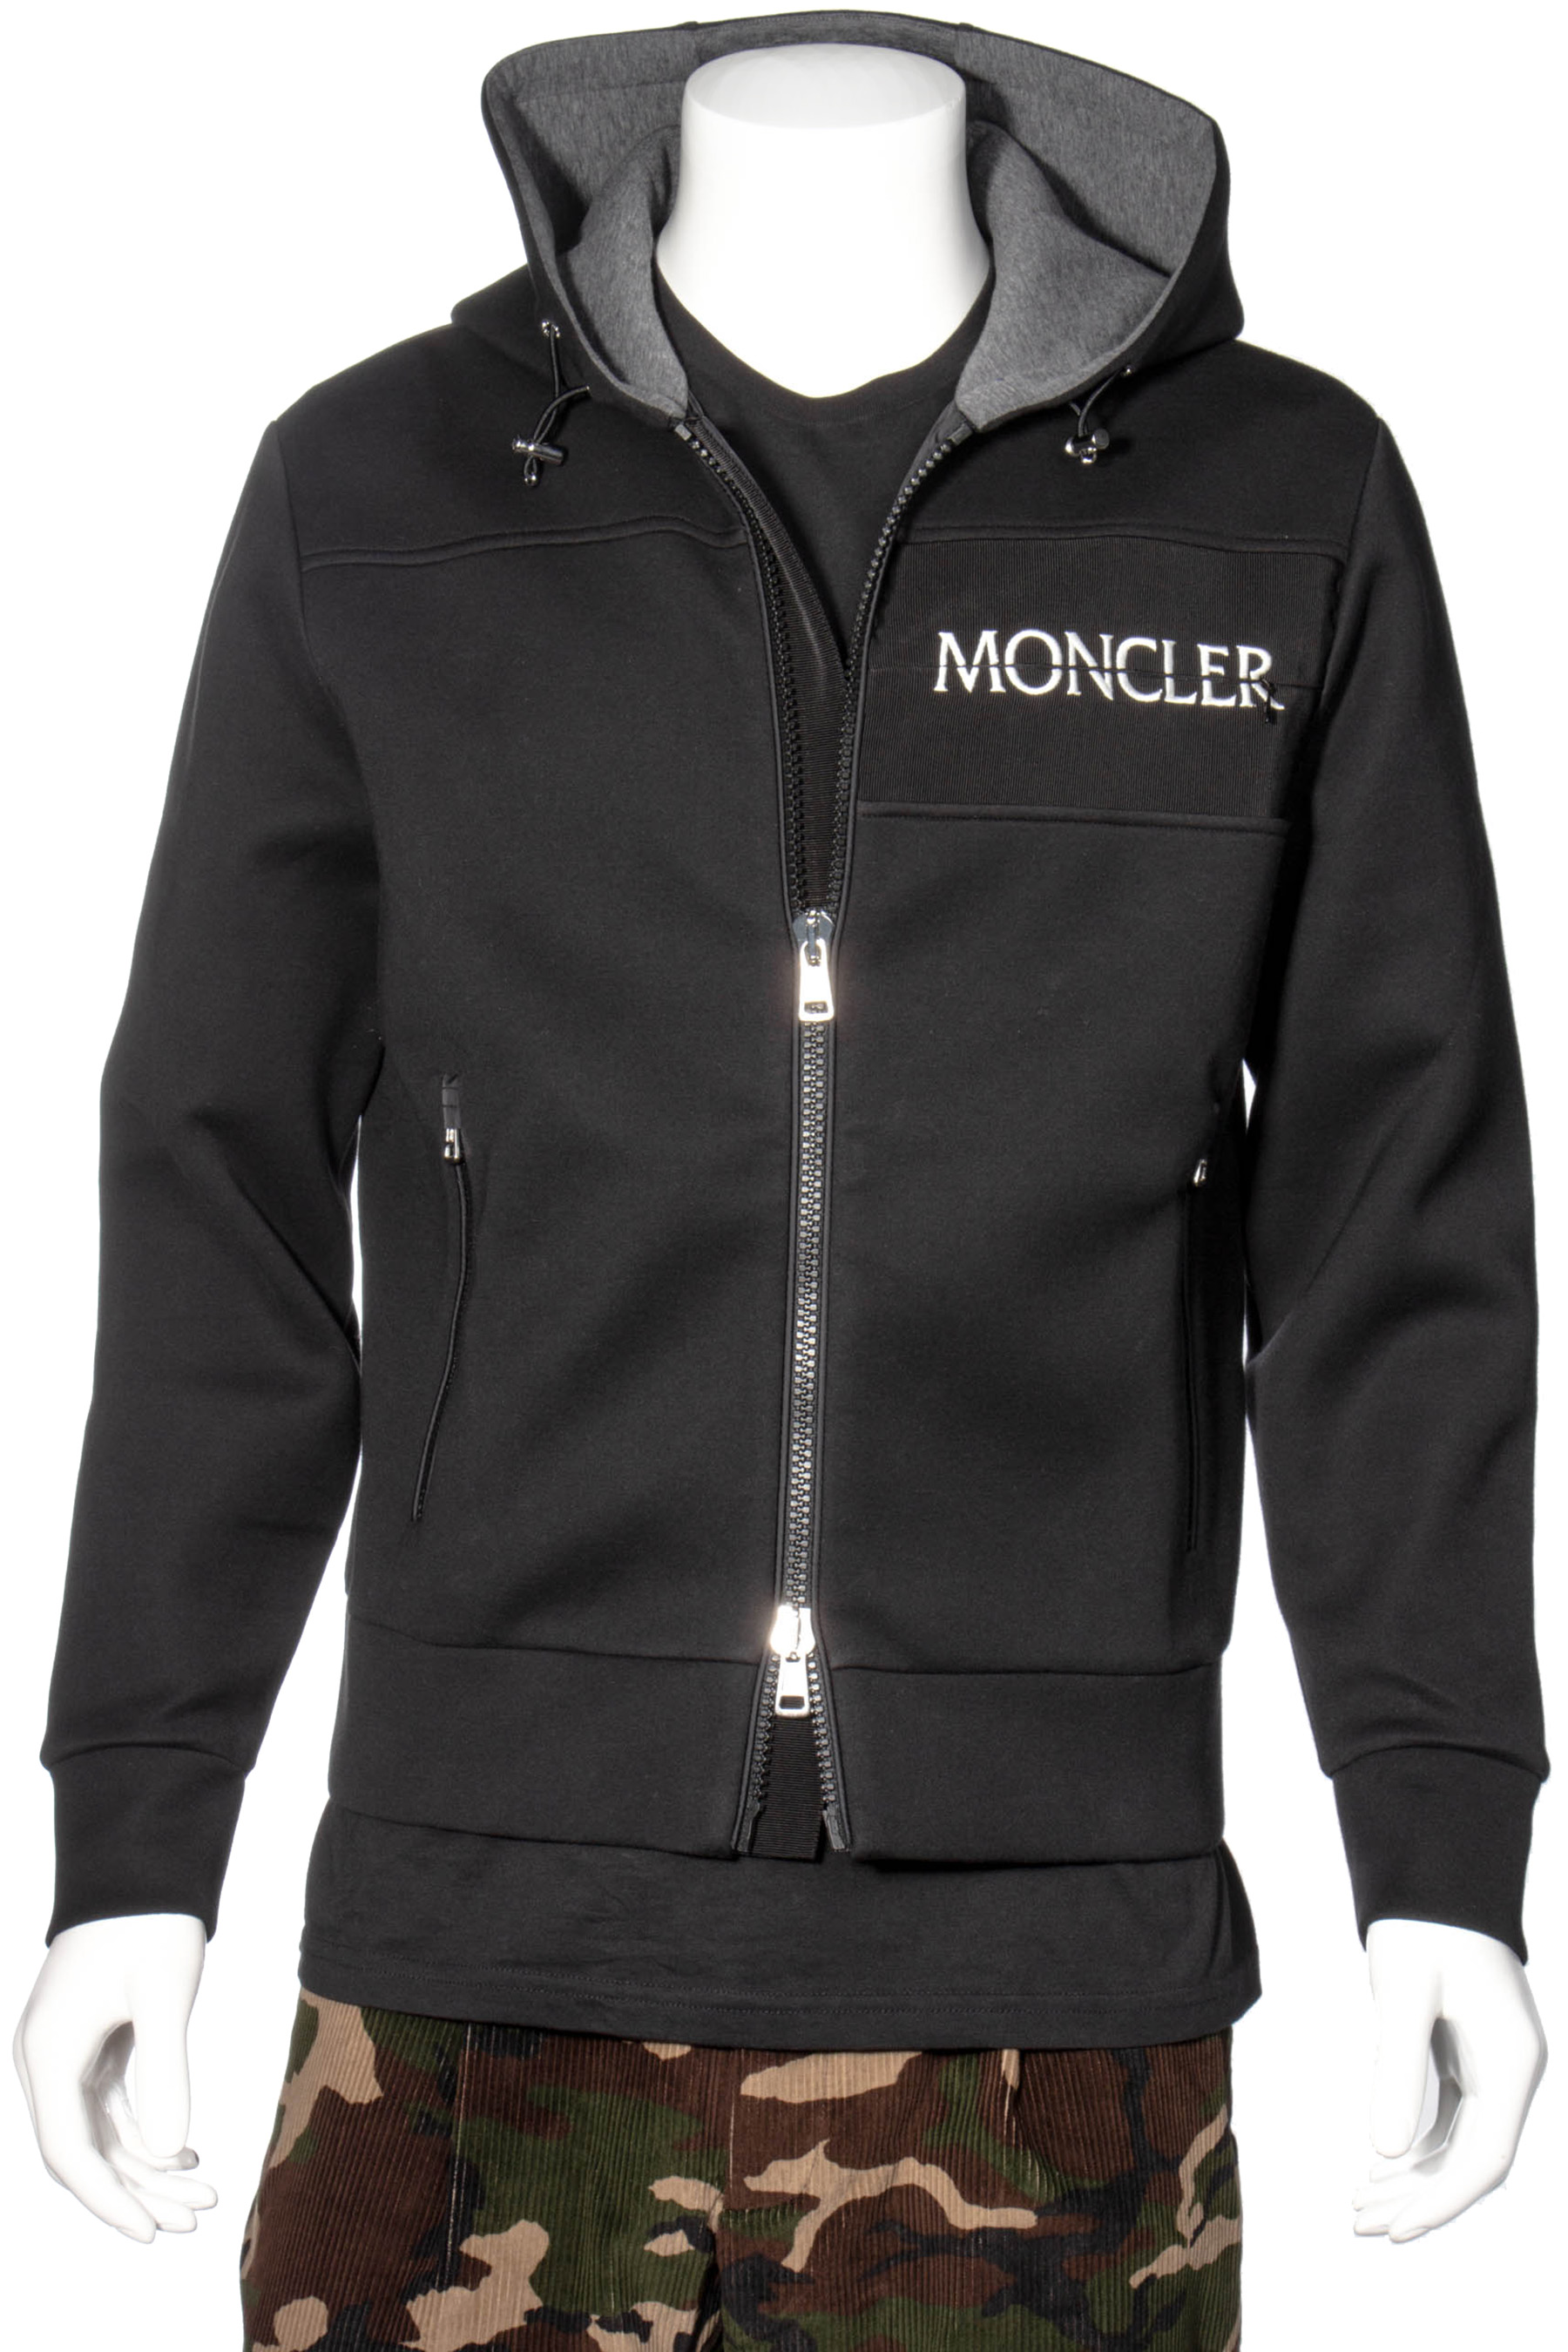 Moncler Zip Hoodie Factory Sale, 54% OFF | www.ingeniovirtual.com